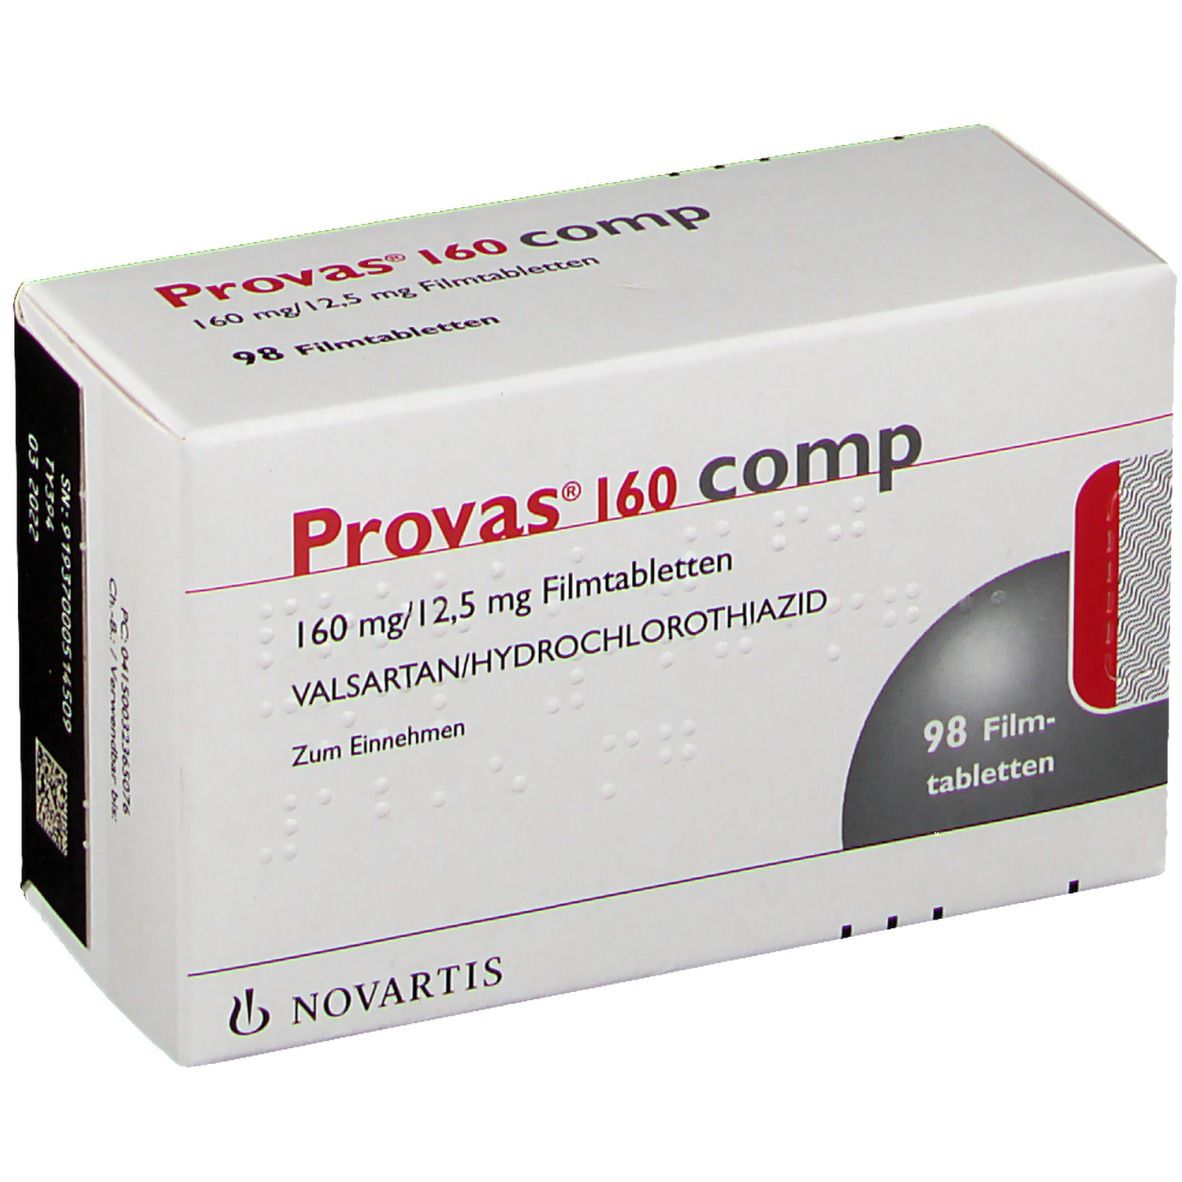 Provas® 160 comp 160 mg/12,5 mg